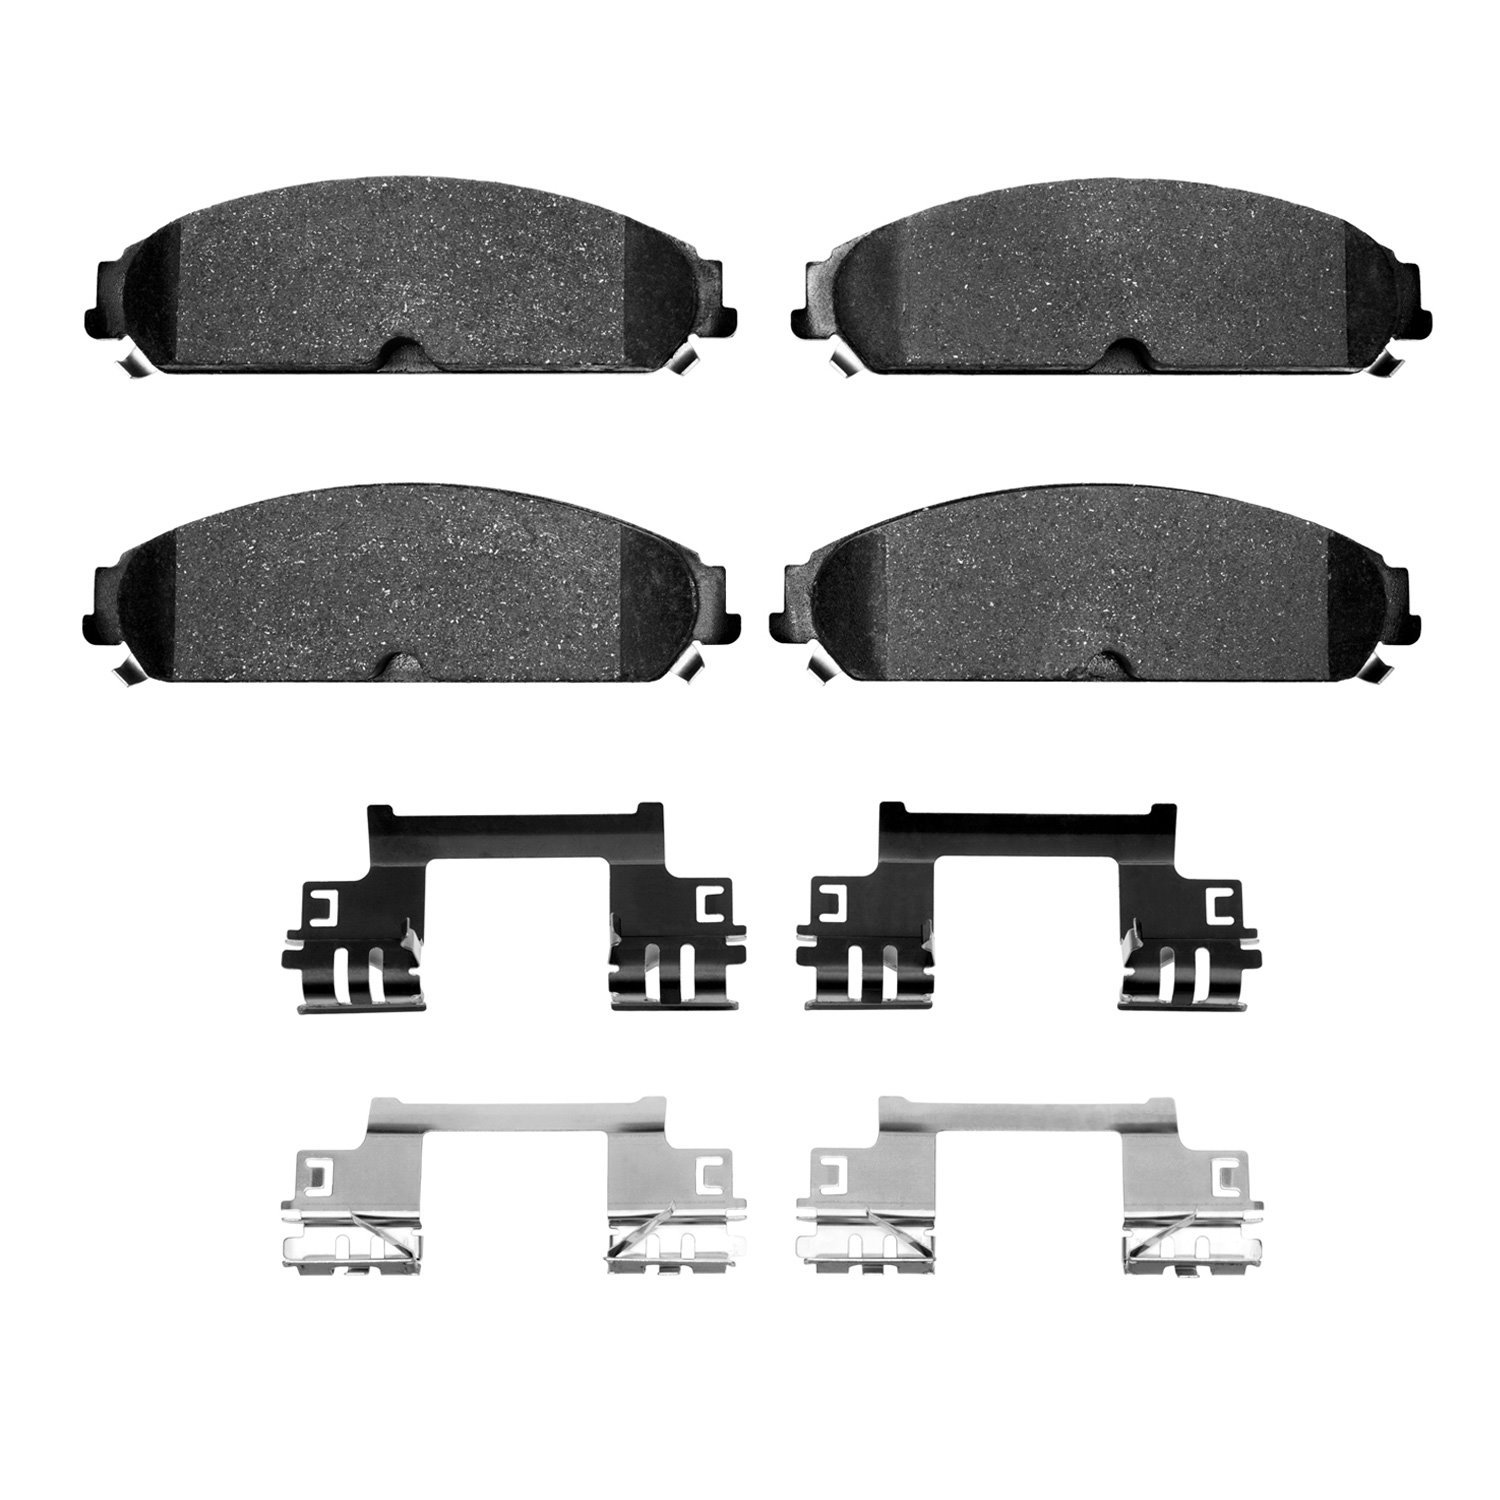 1214-1058-02 Heavy-Duty Brake Pads & Hardware Kit, Fits Select Mopar, Position: Front